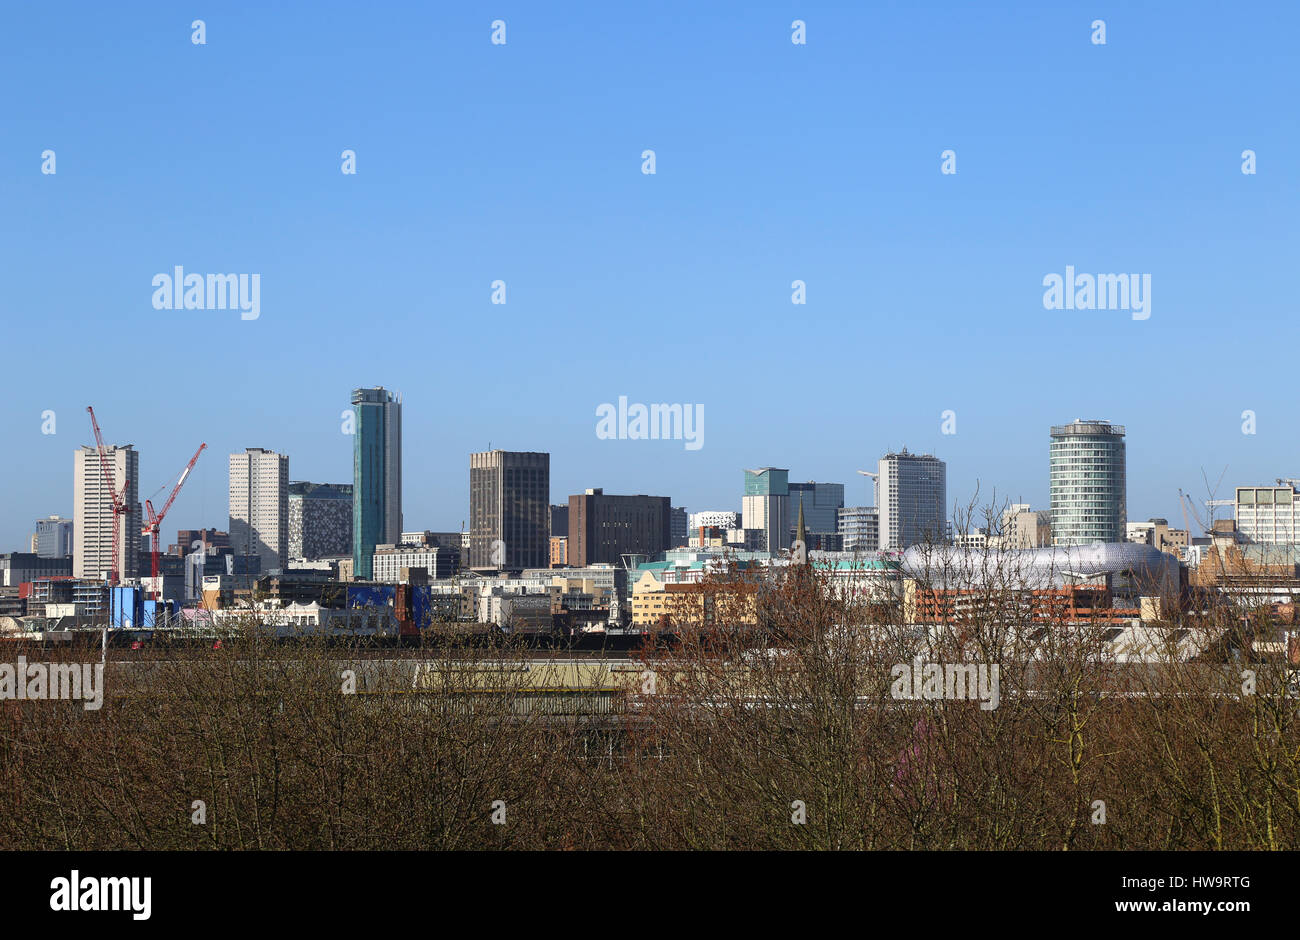 Birmingham england skyline hi-res stock photography and images - Alamy